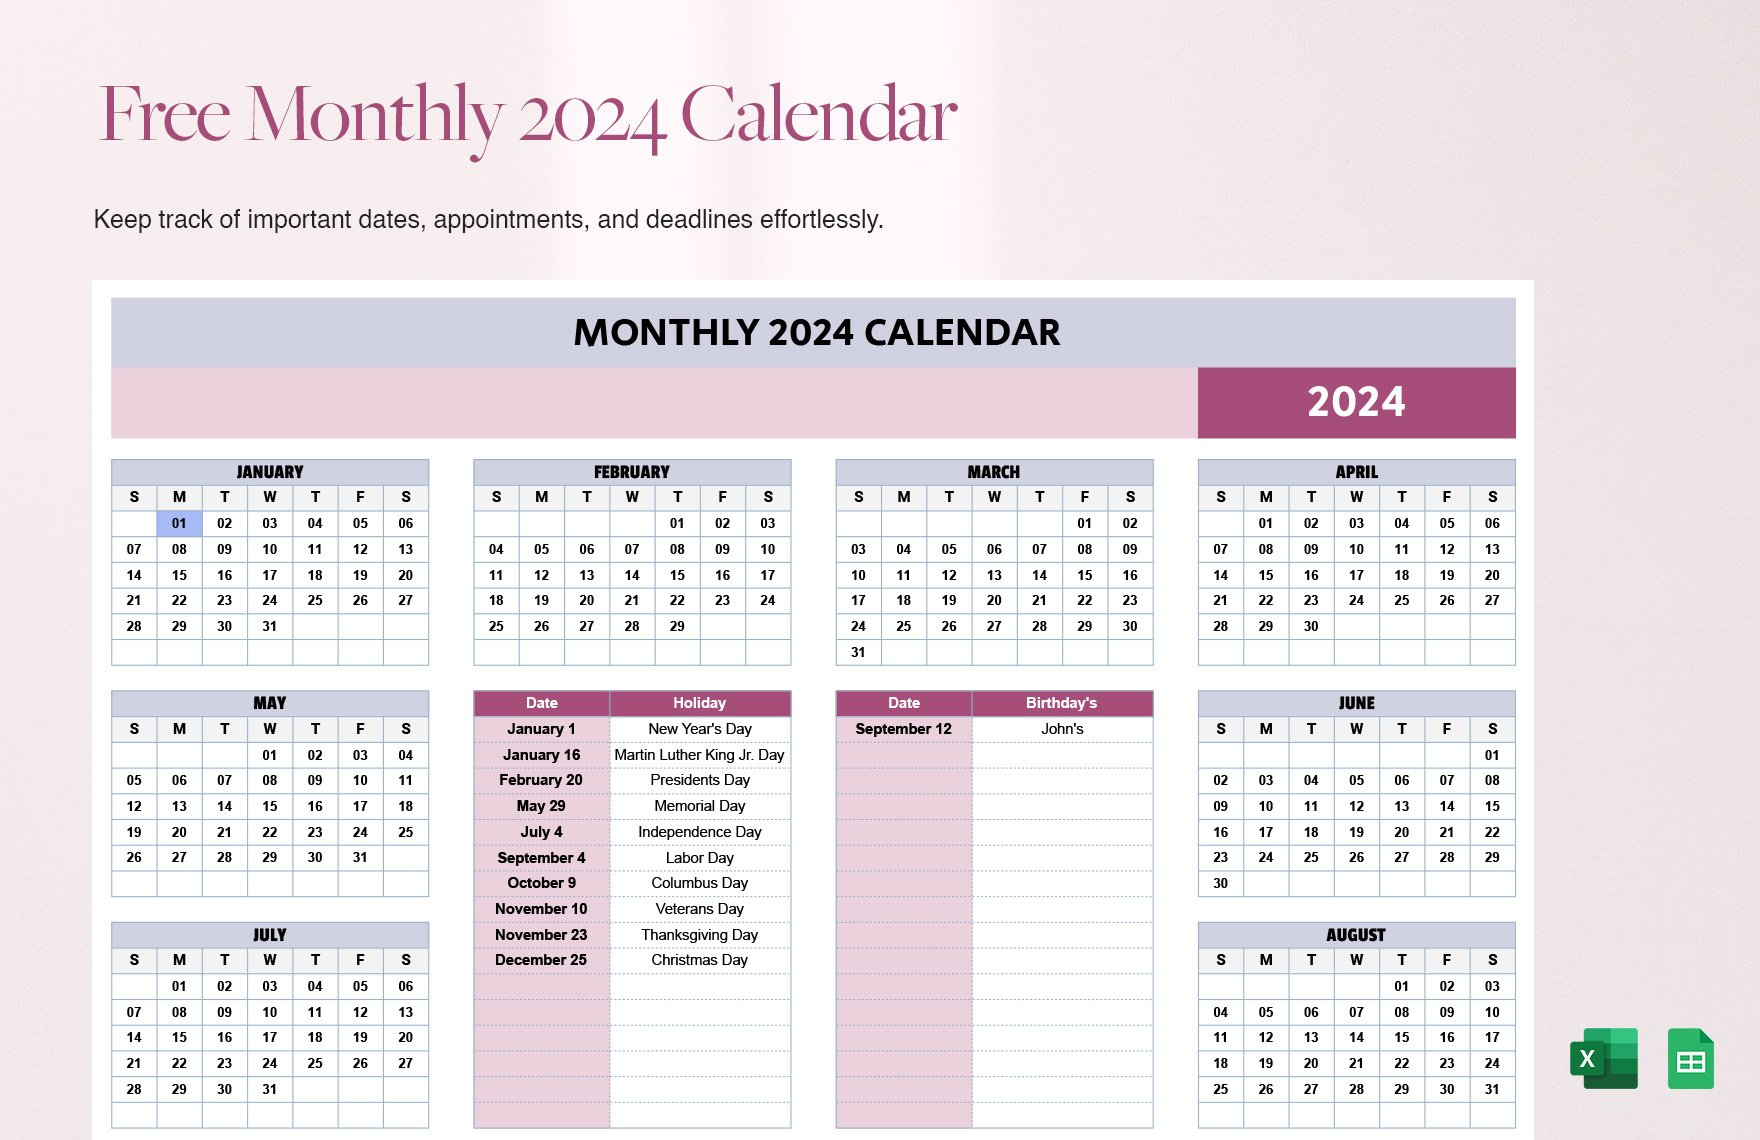 Free Monthly 2024 Calendar Template - Download In Excel, Google | Printable Calendar 2024 Free Excel